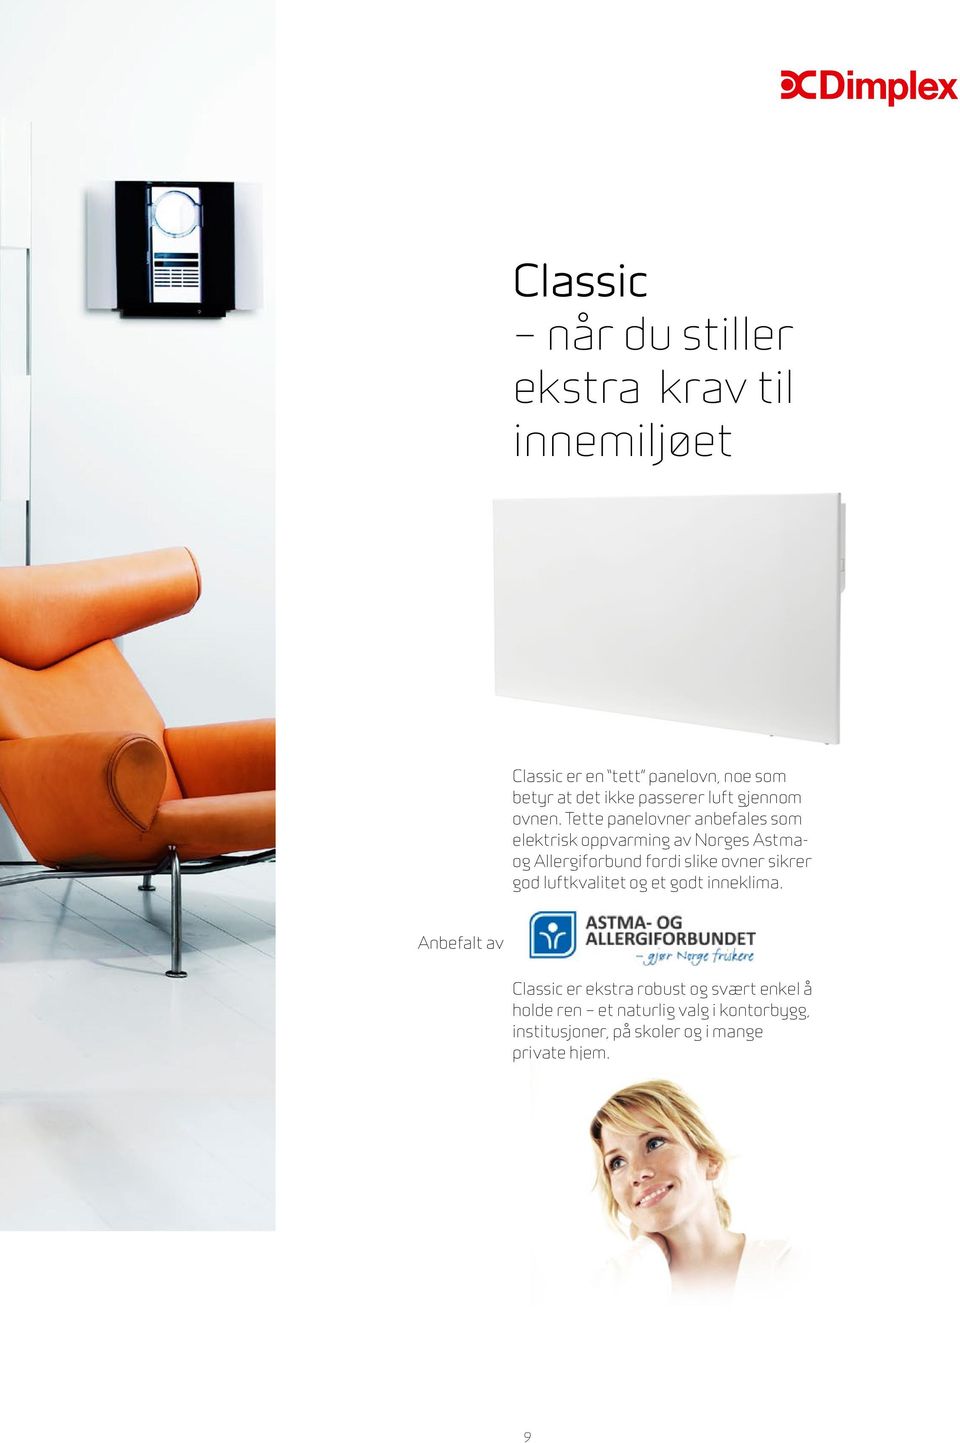 Tette panelovner anbefales som elektrisk oppvarming av Norges Astmaog Allergiforbund fordi slike ovner